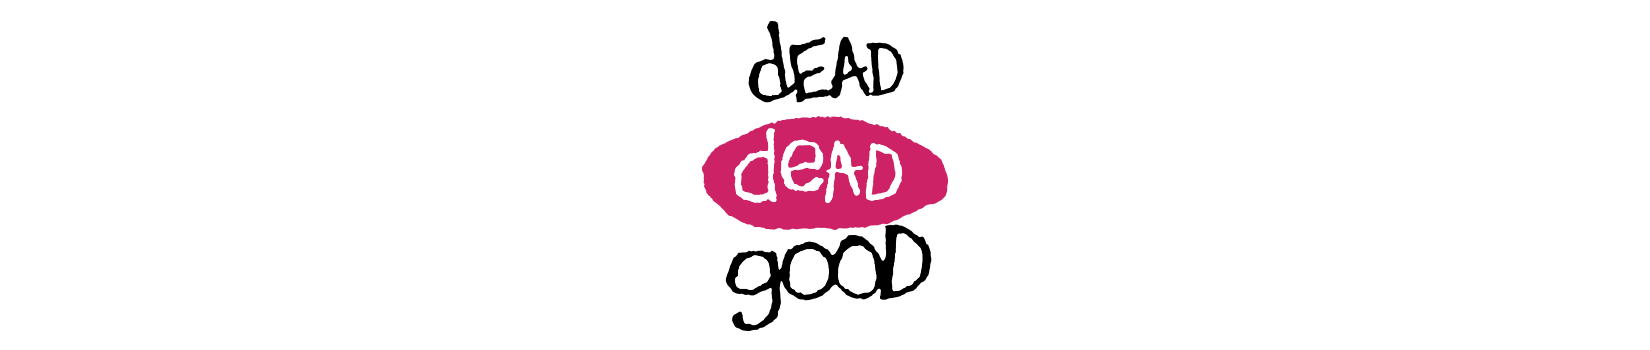 Dead Dead Good